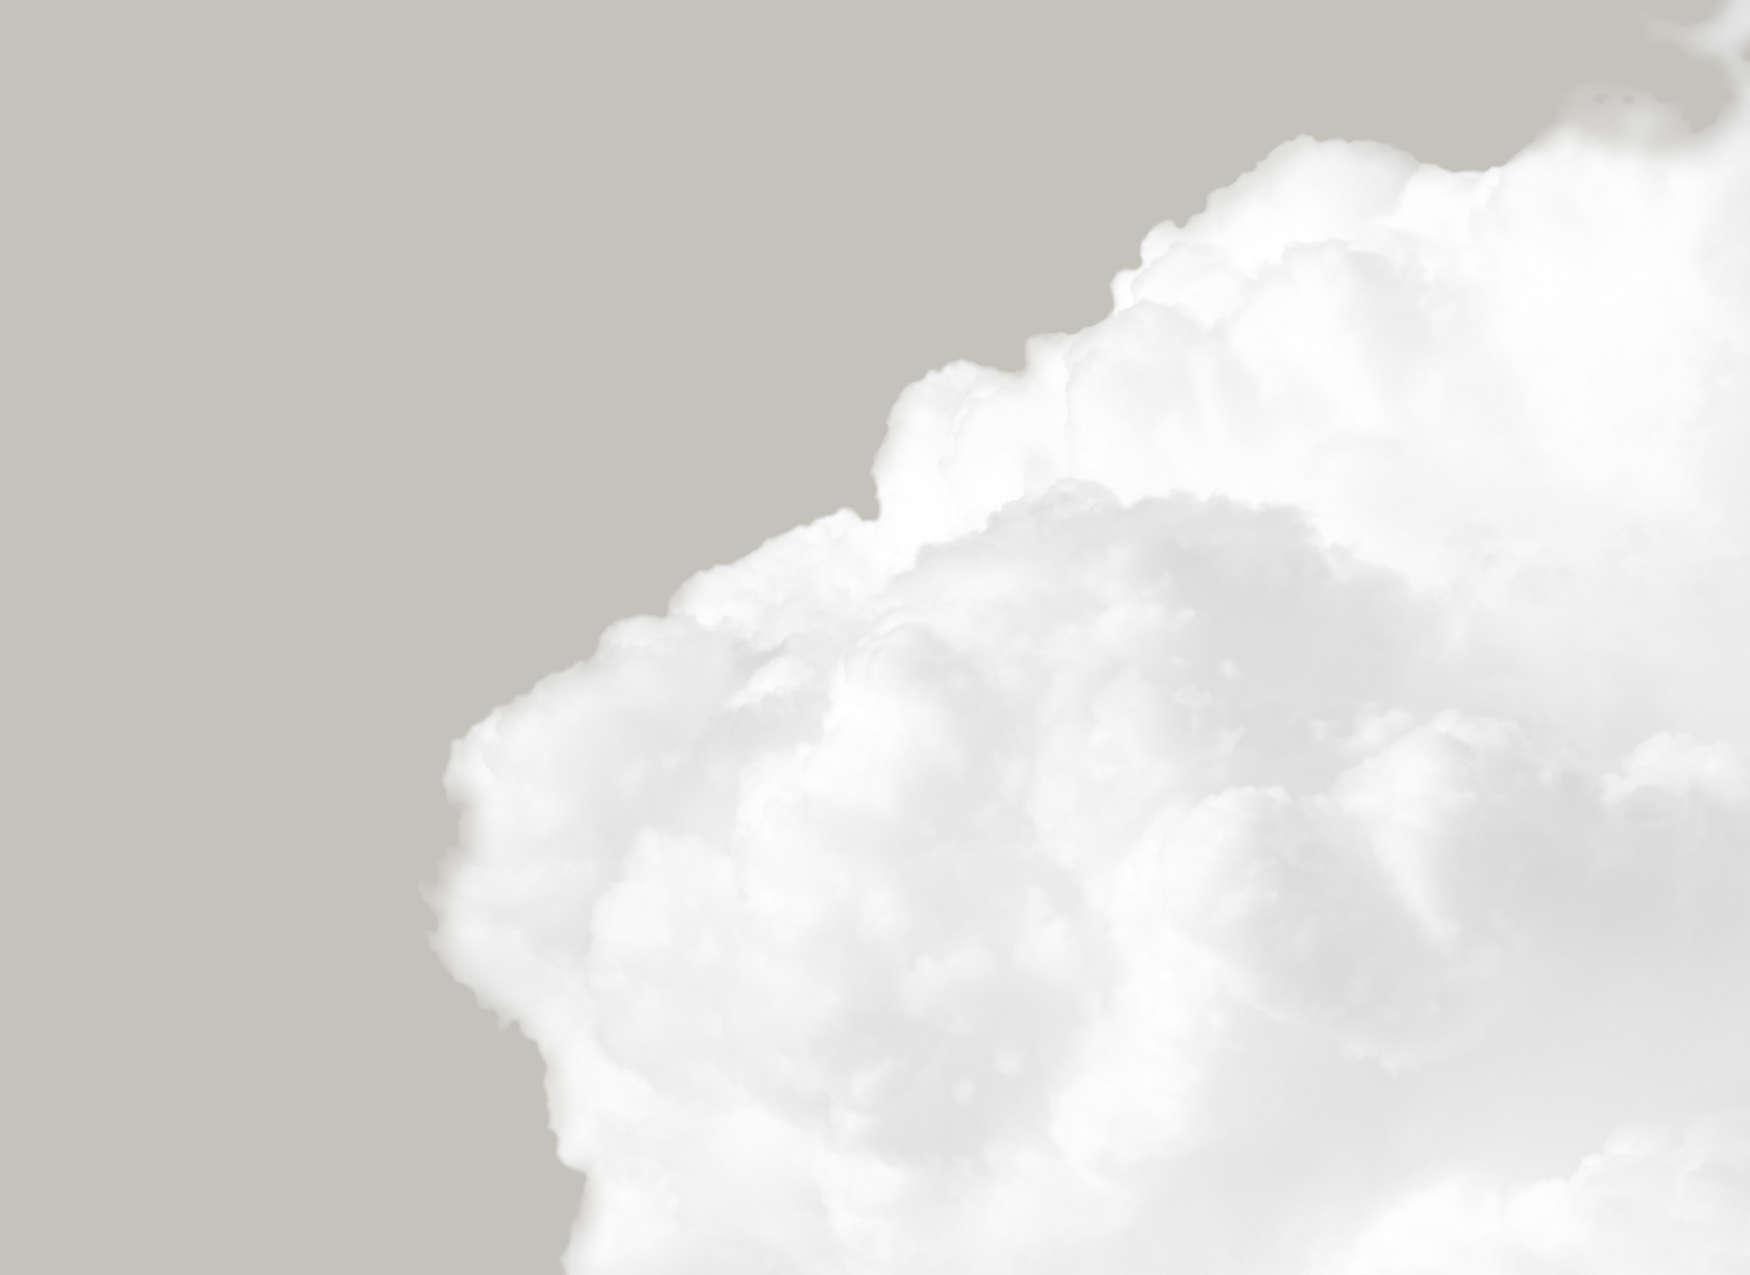             Fotomurali con nuvole bianche in un cielo grigio - Grigio, Bianco
        